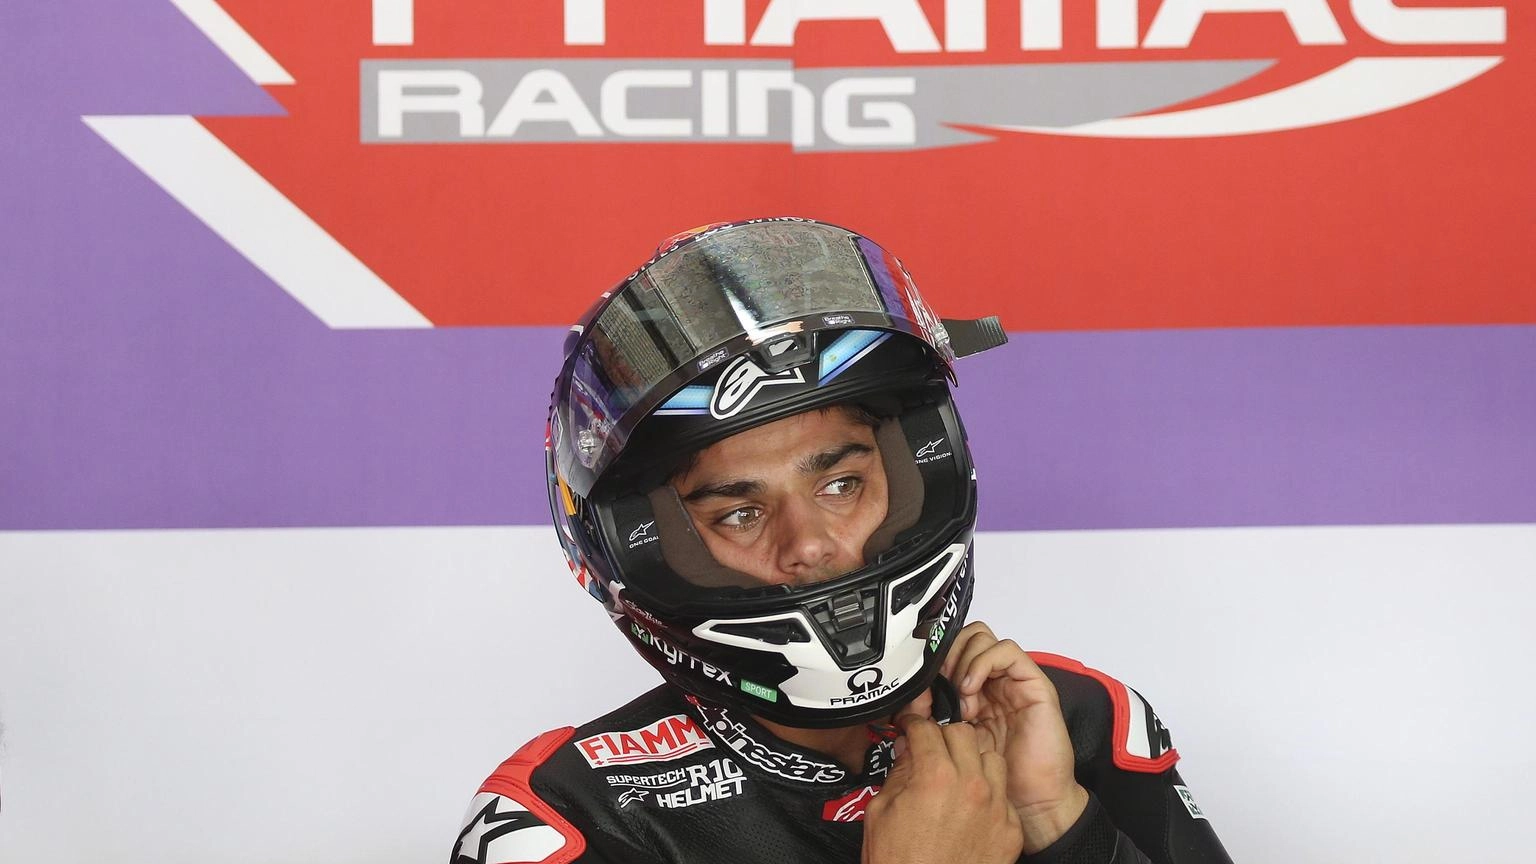 MotoGp: viola e rosso per la nuova Ducati team Pramac